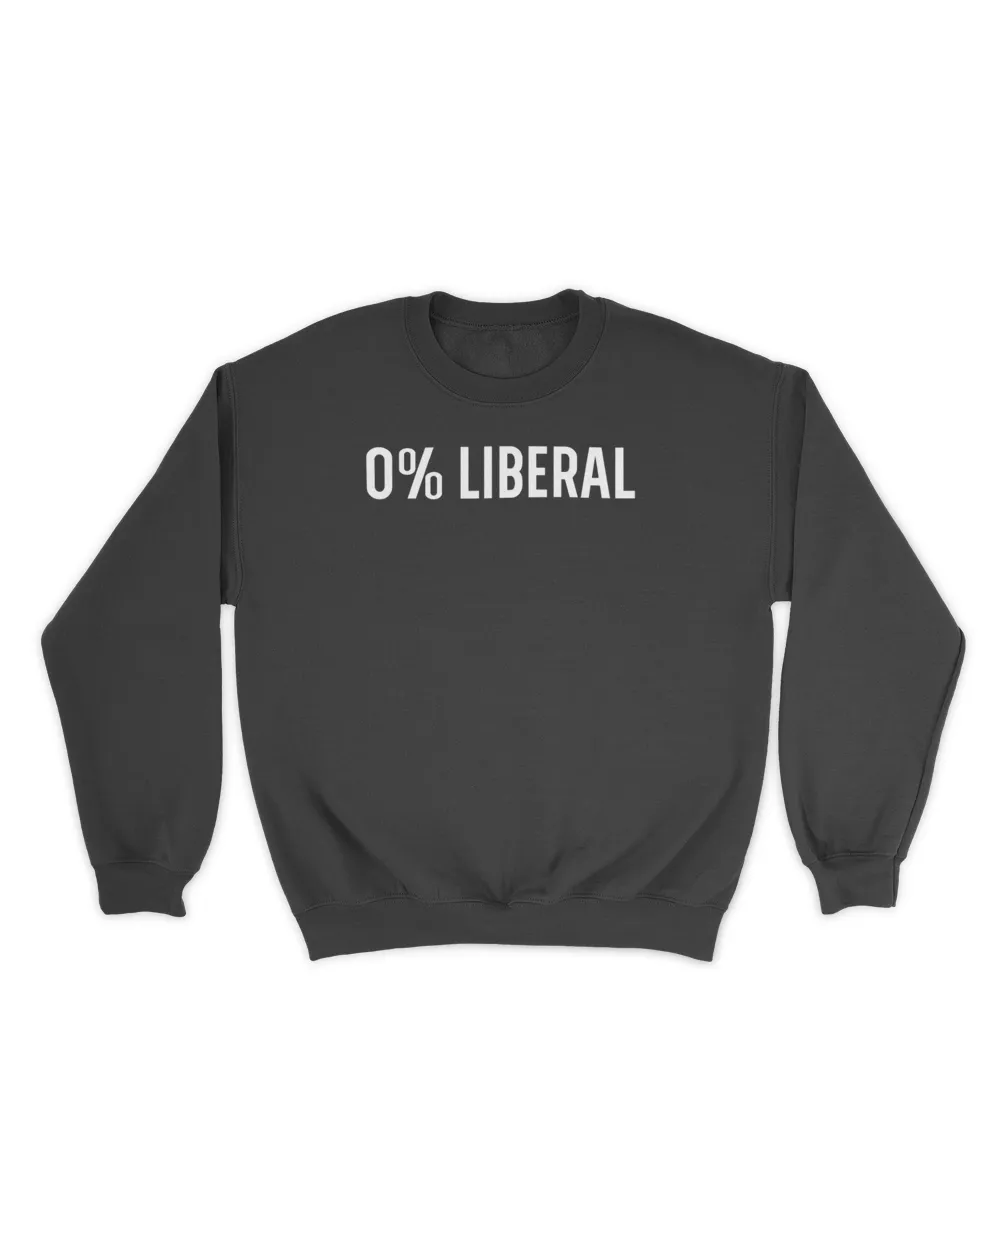 0% Liberal Sweatshirt